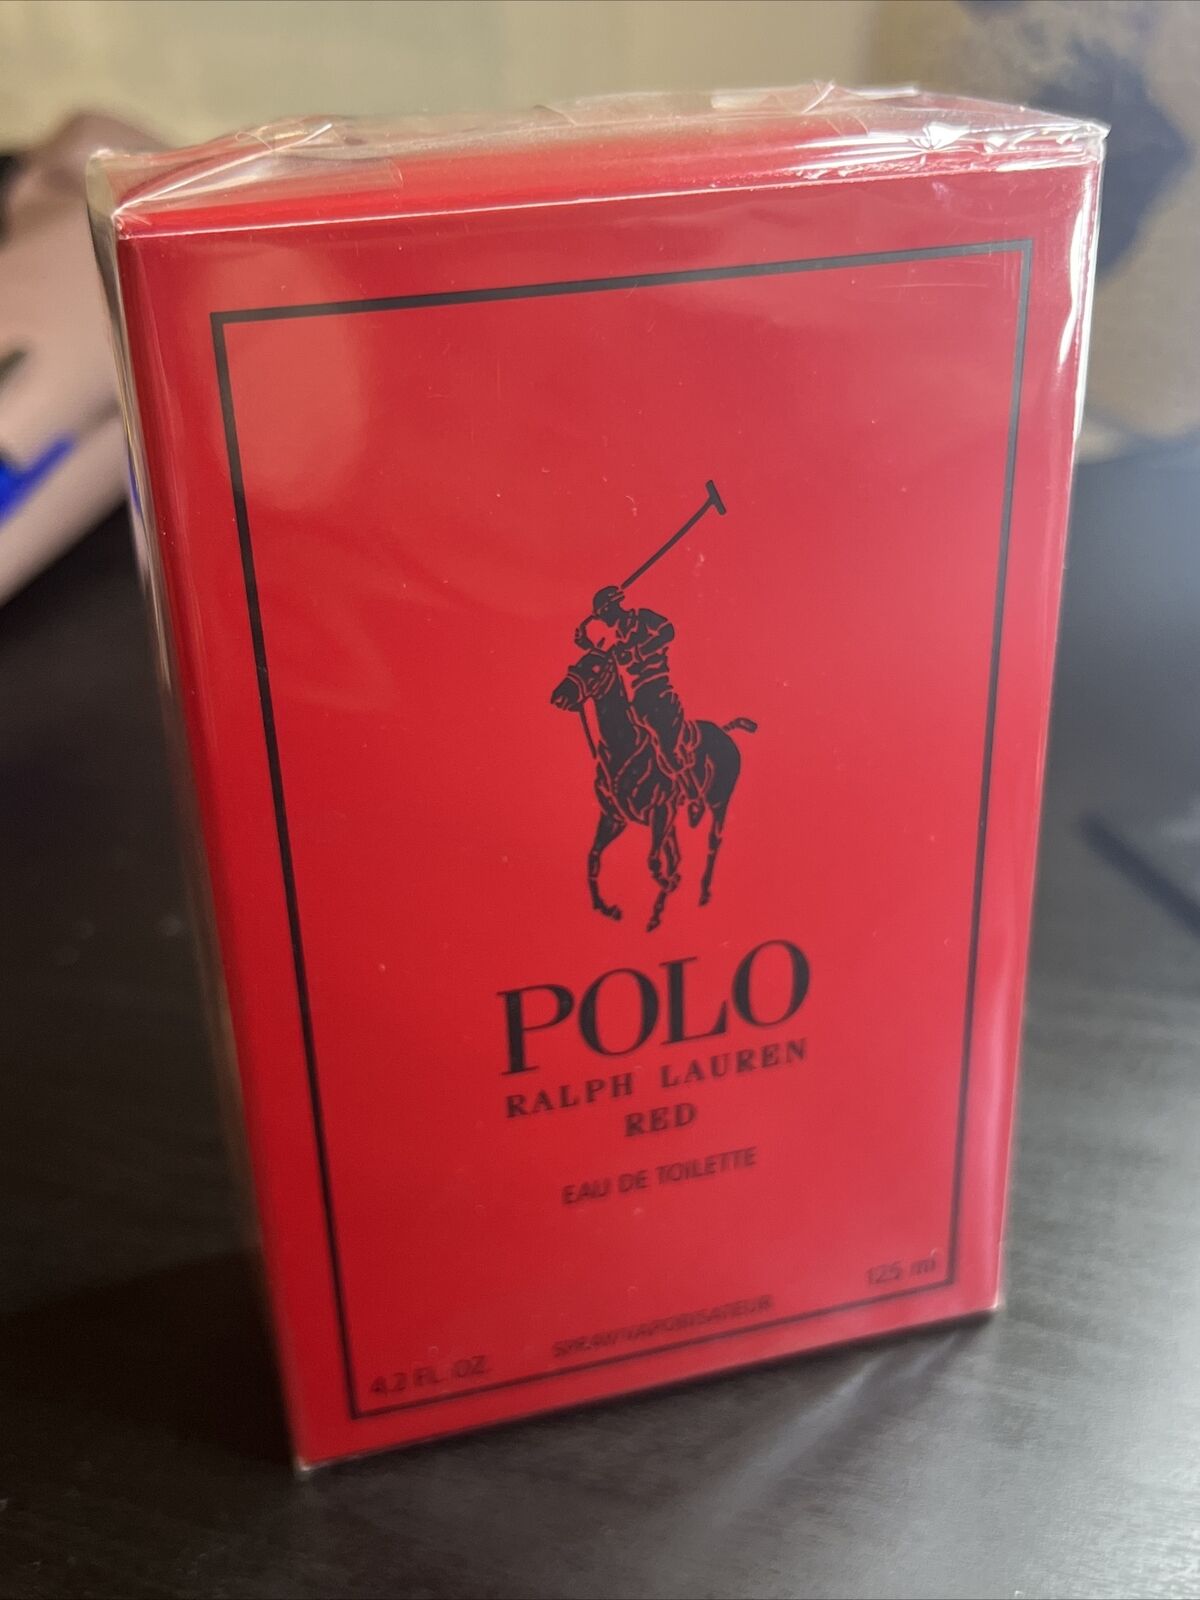 Polo Red by Ralph Lauren 4.2 FL OZ ( 125ml) EDT